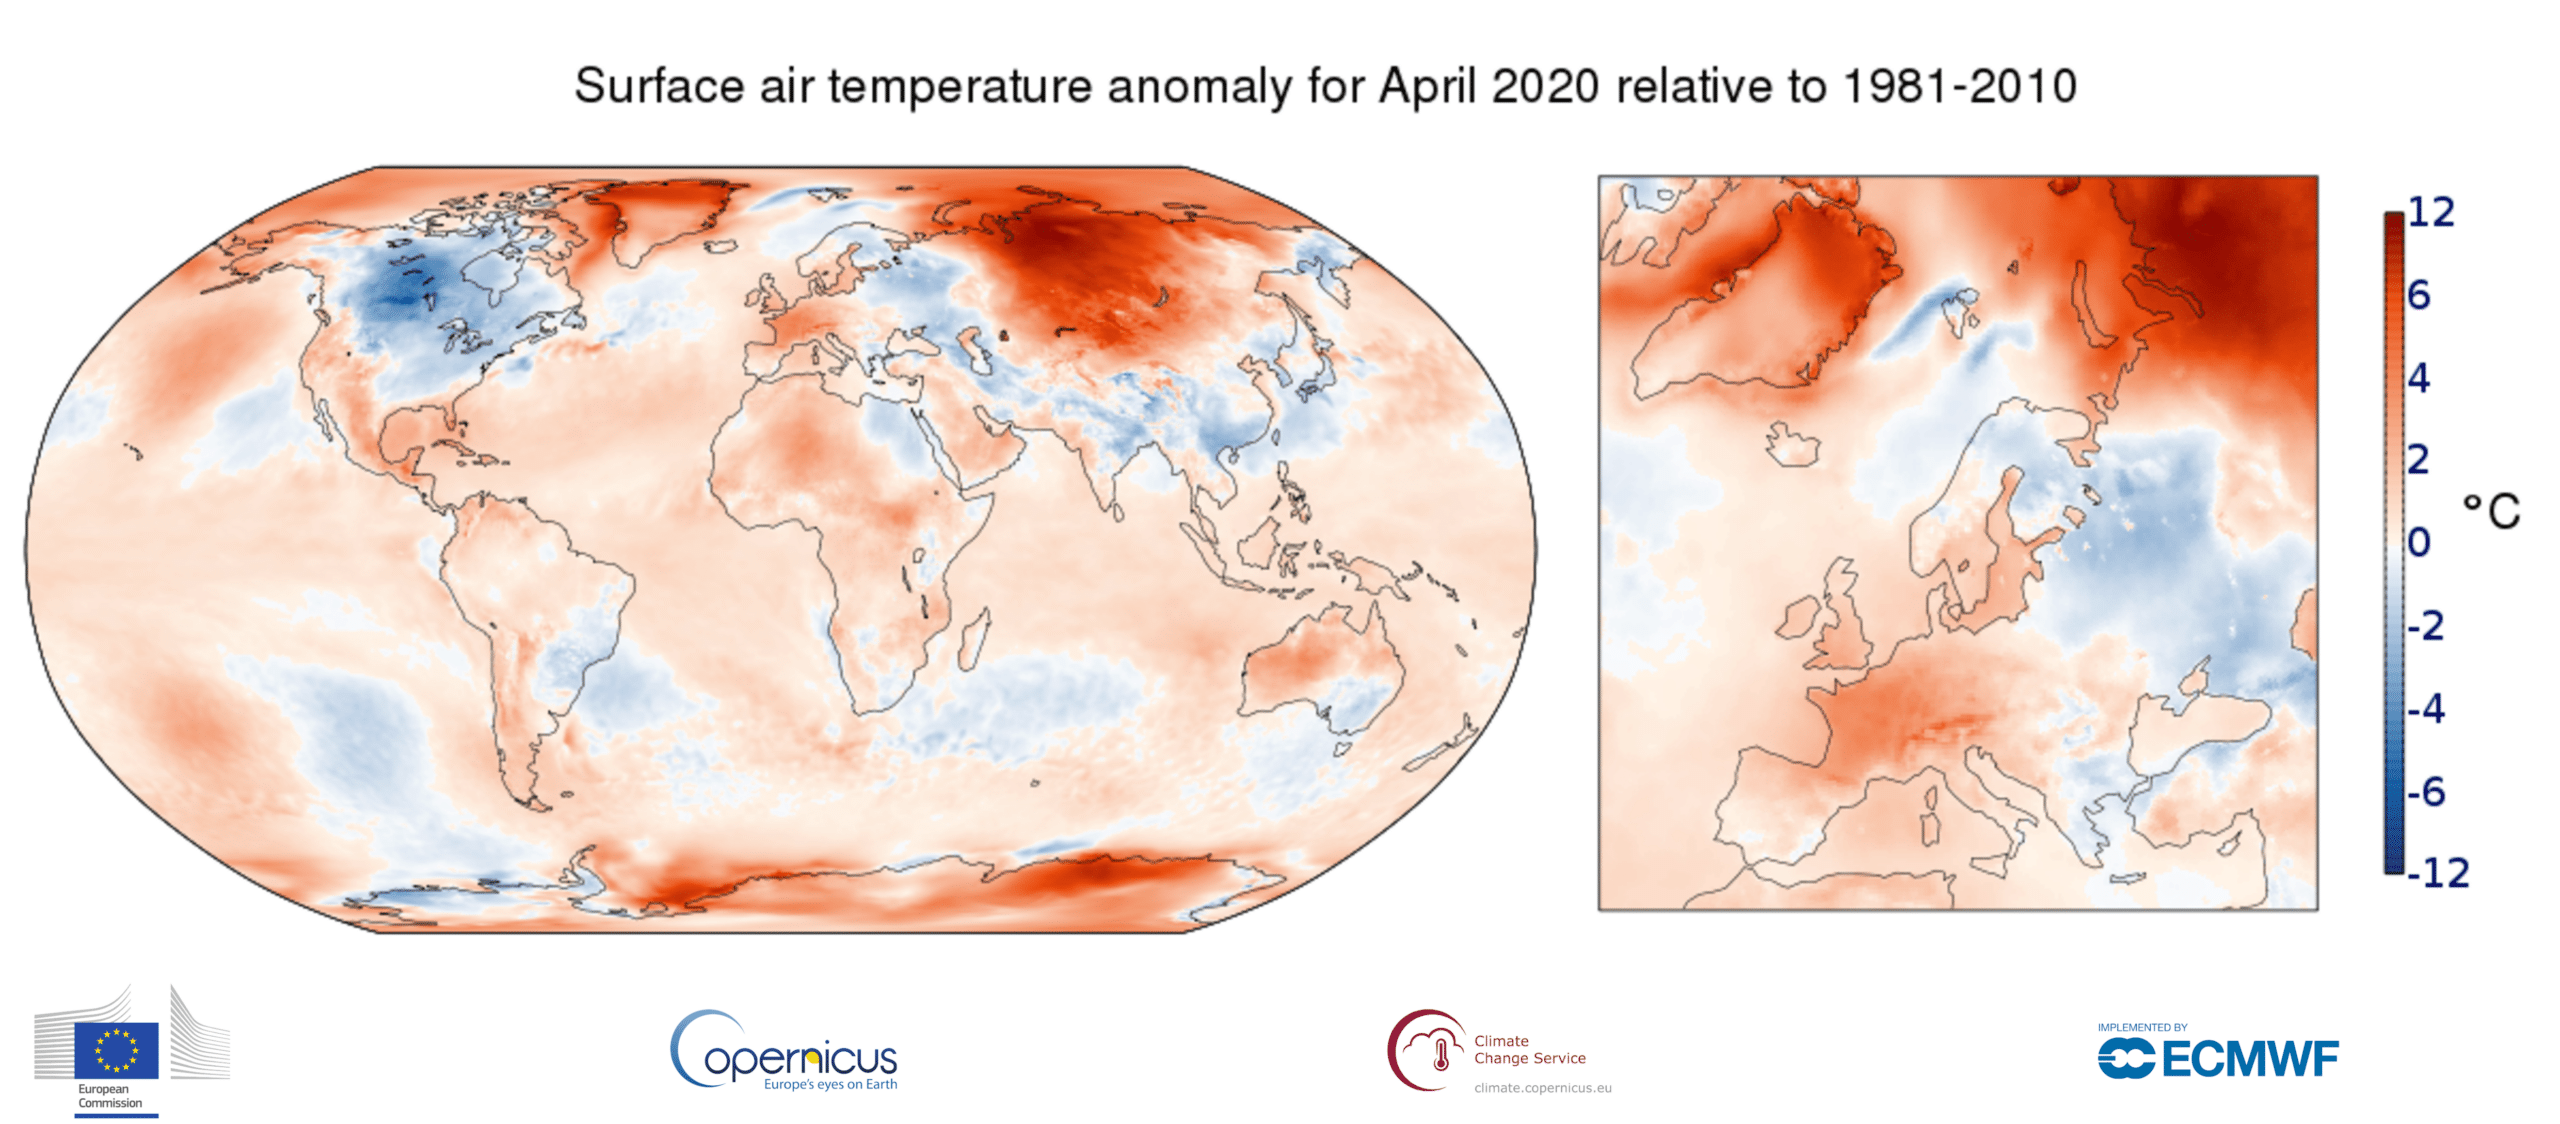 Source: https://climate.copernicus.eu/surface-air-temperature-april-2020